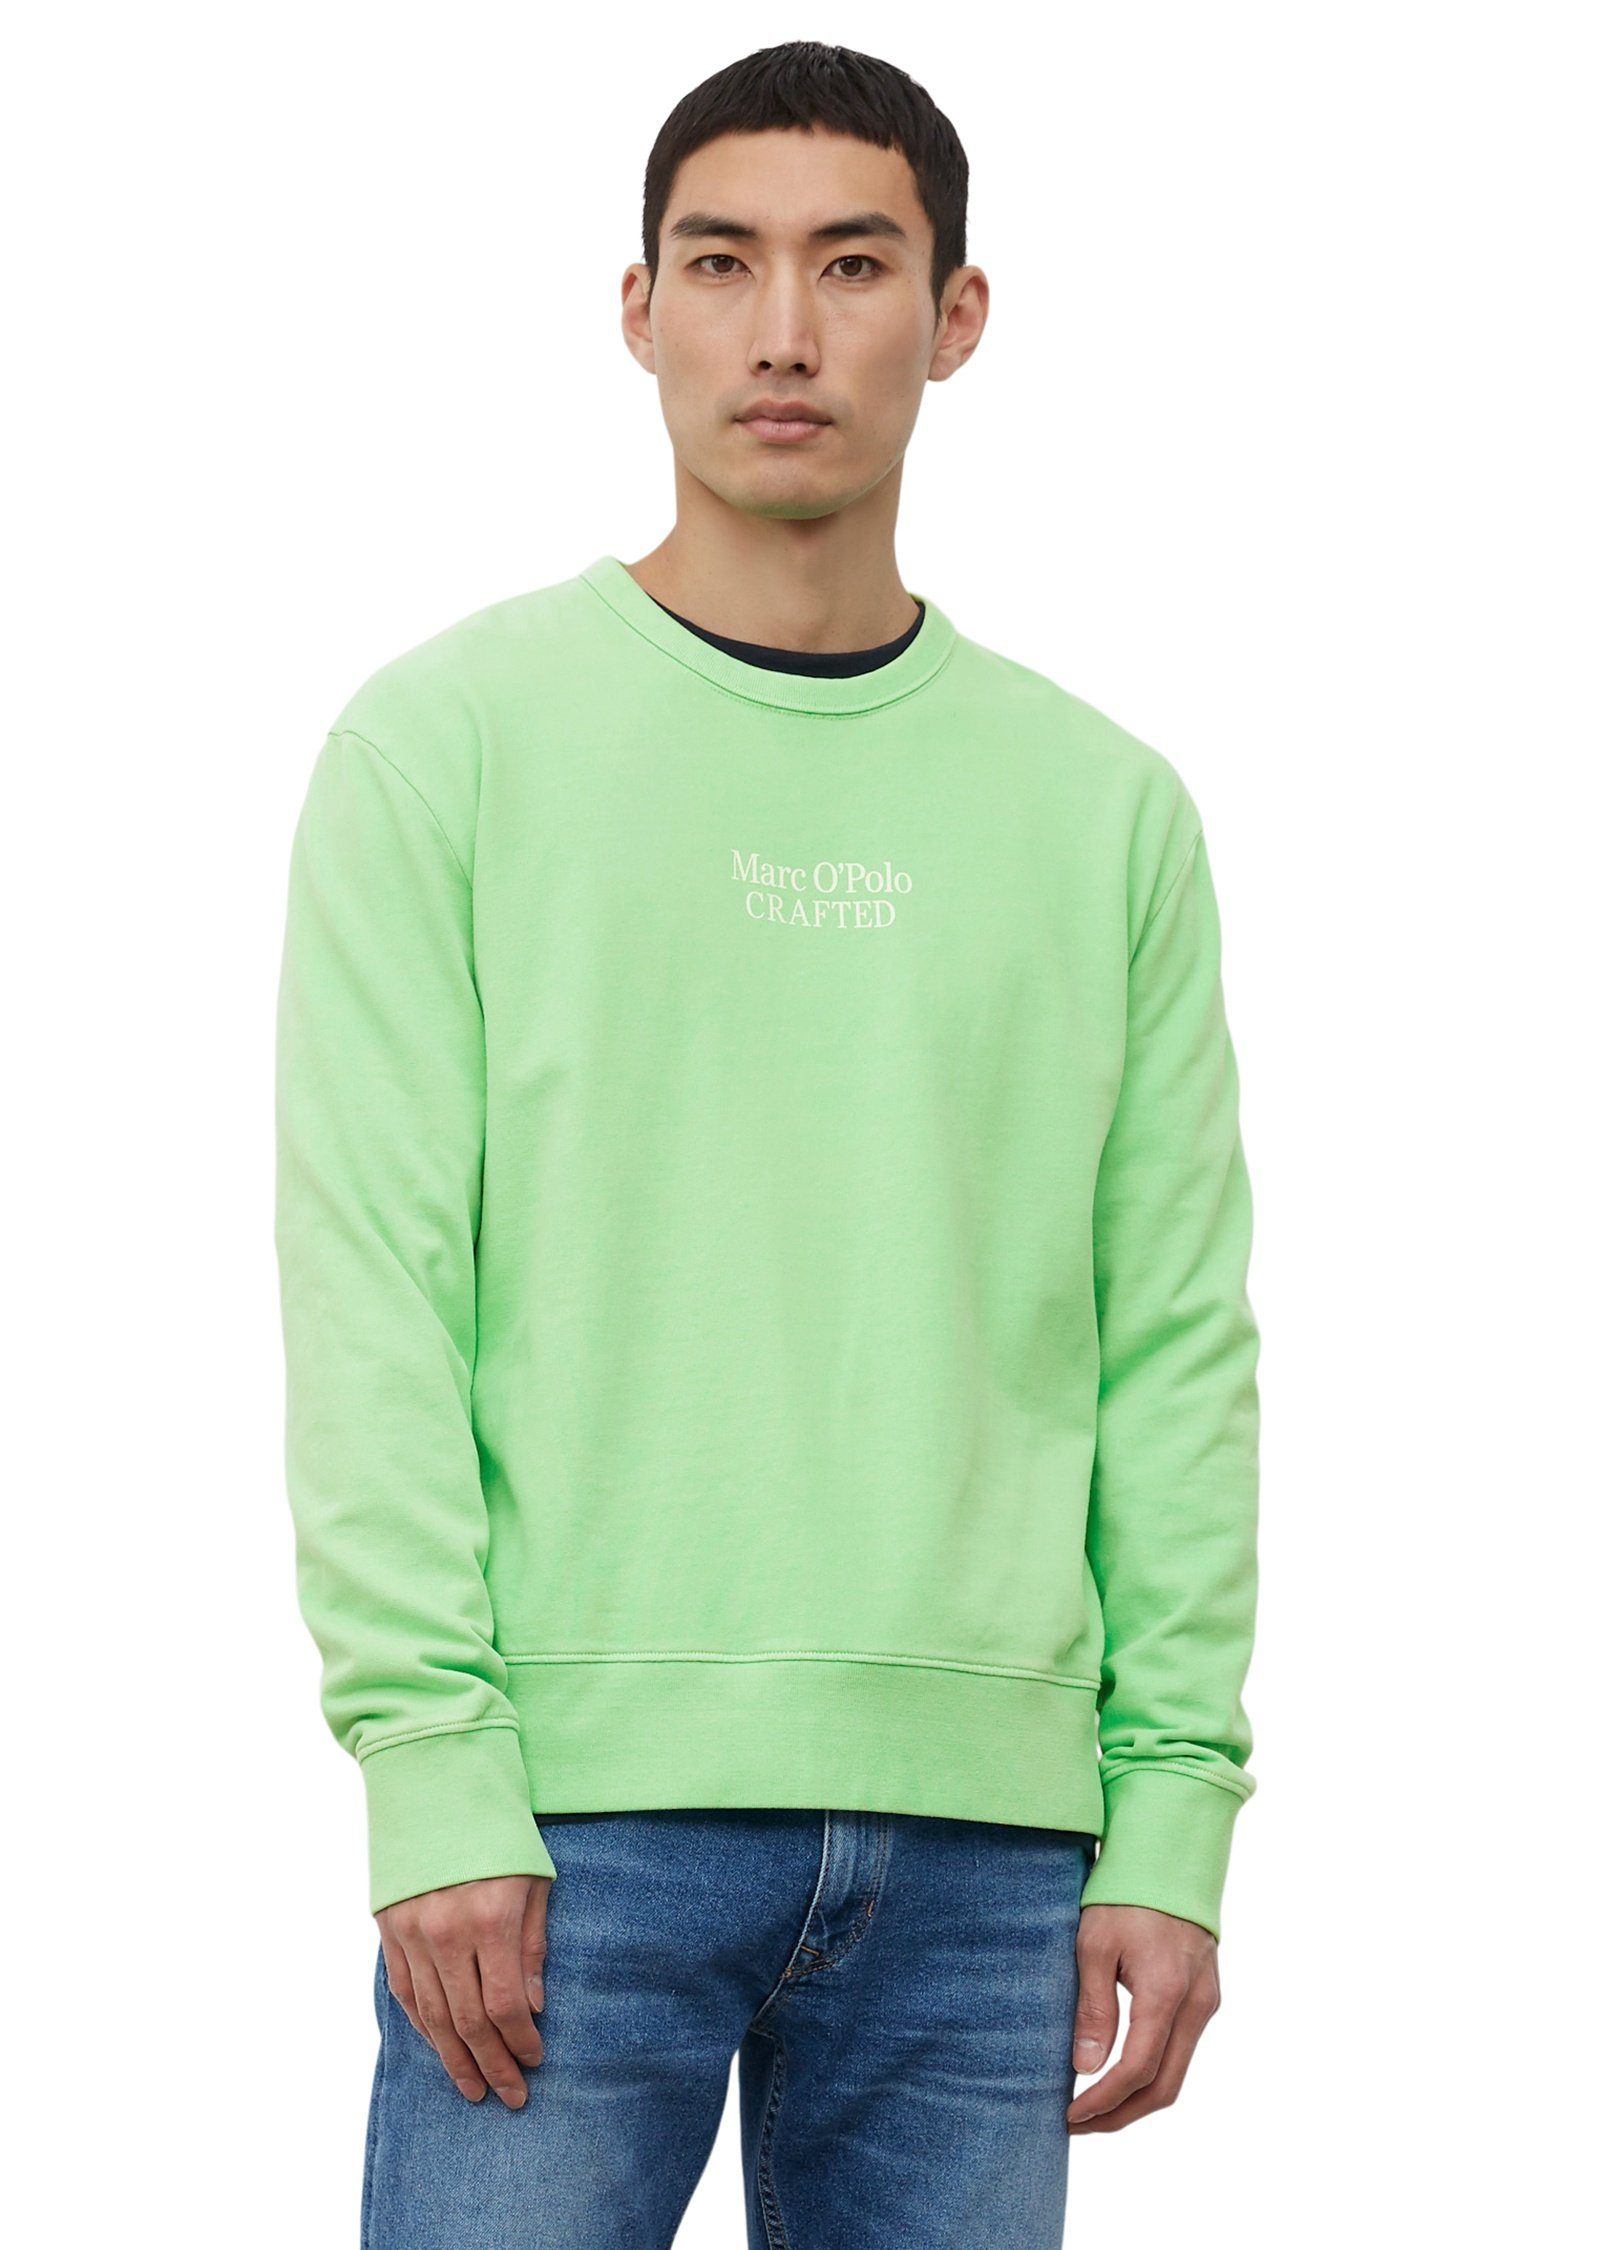 O'Polo grün Sweatshirt Terry-Sweat-Qualität softer Marc in